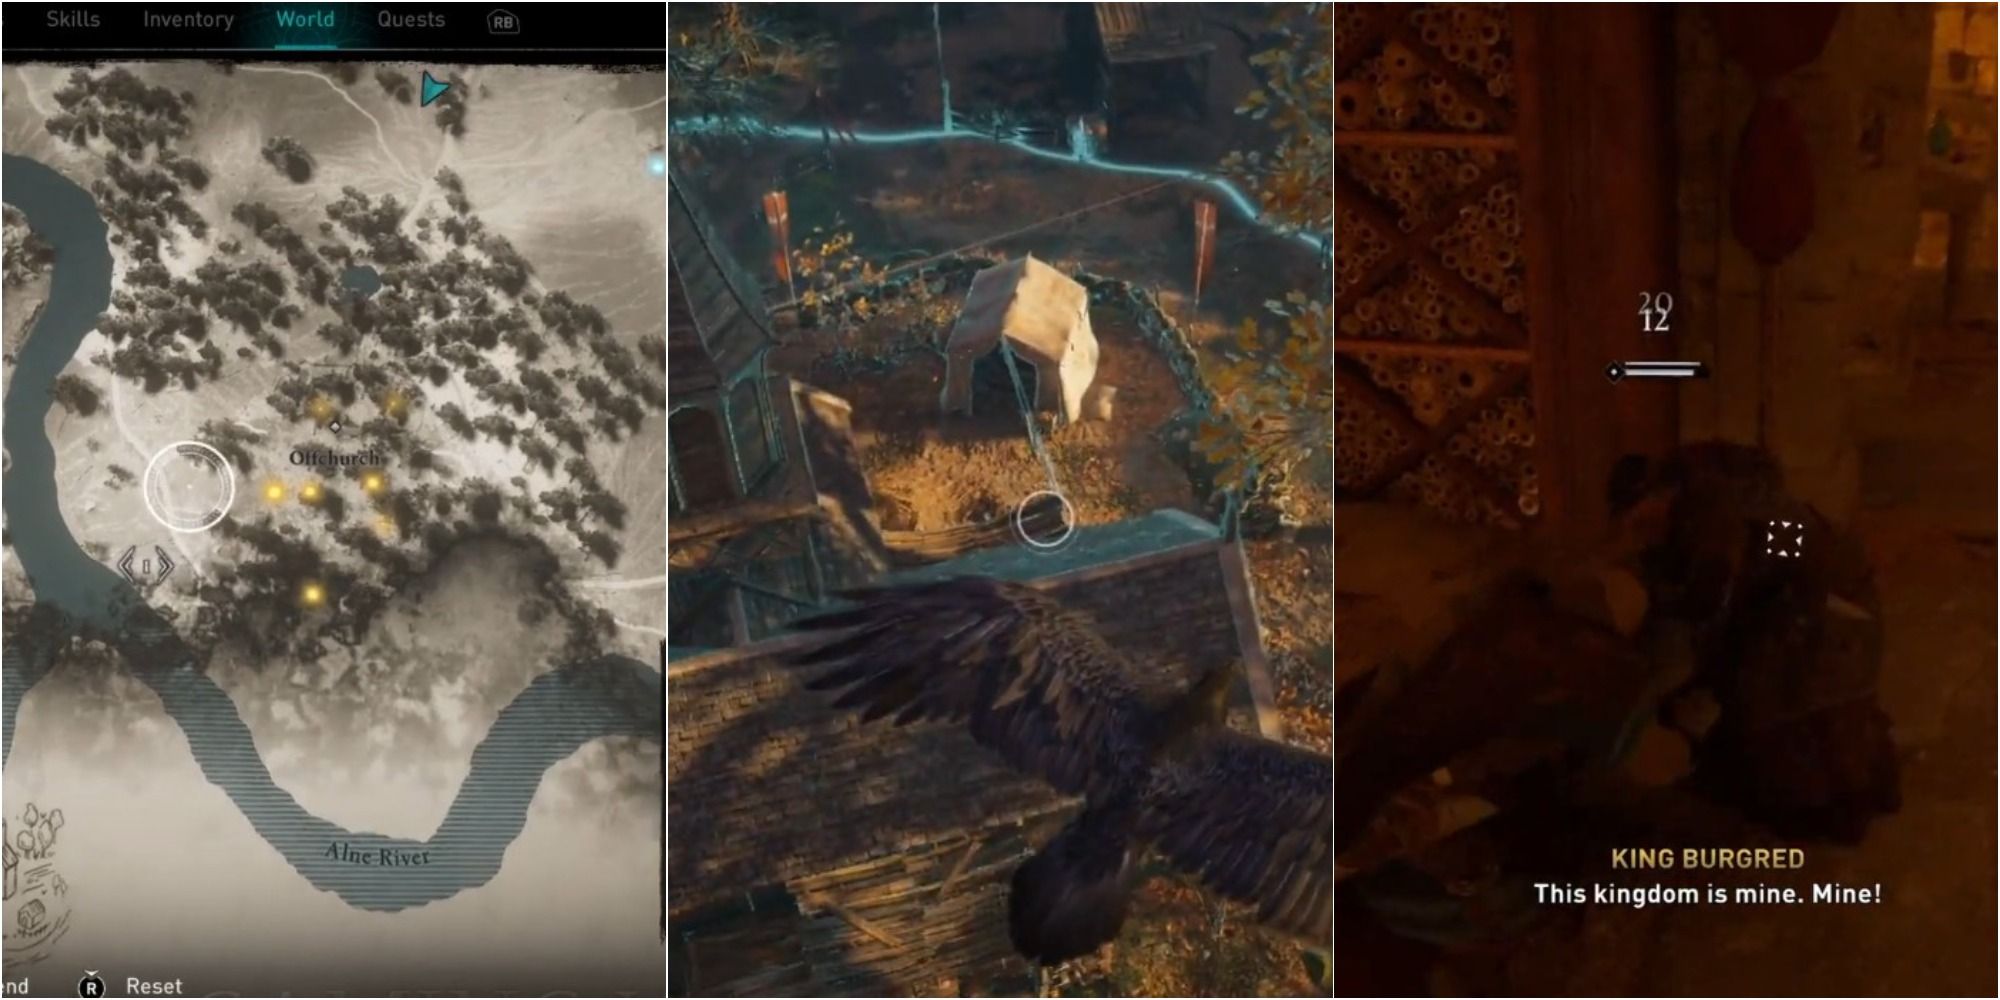 Assassin's Creed Valhalla Tilting the Balance split image of ledecestrescire map, raven over church and Eivor fighting Burgred